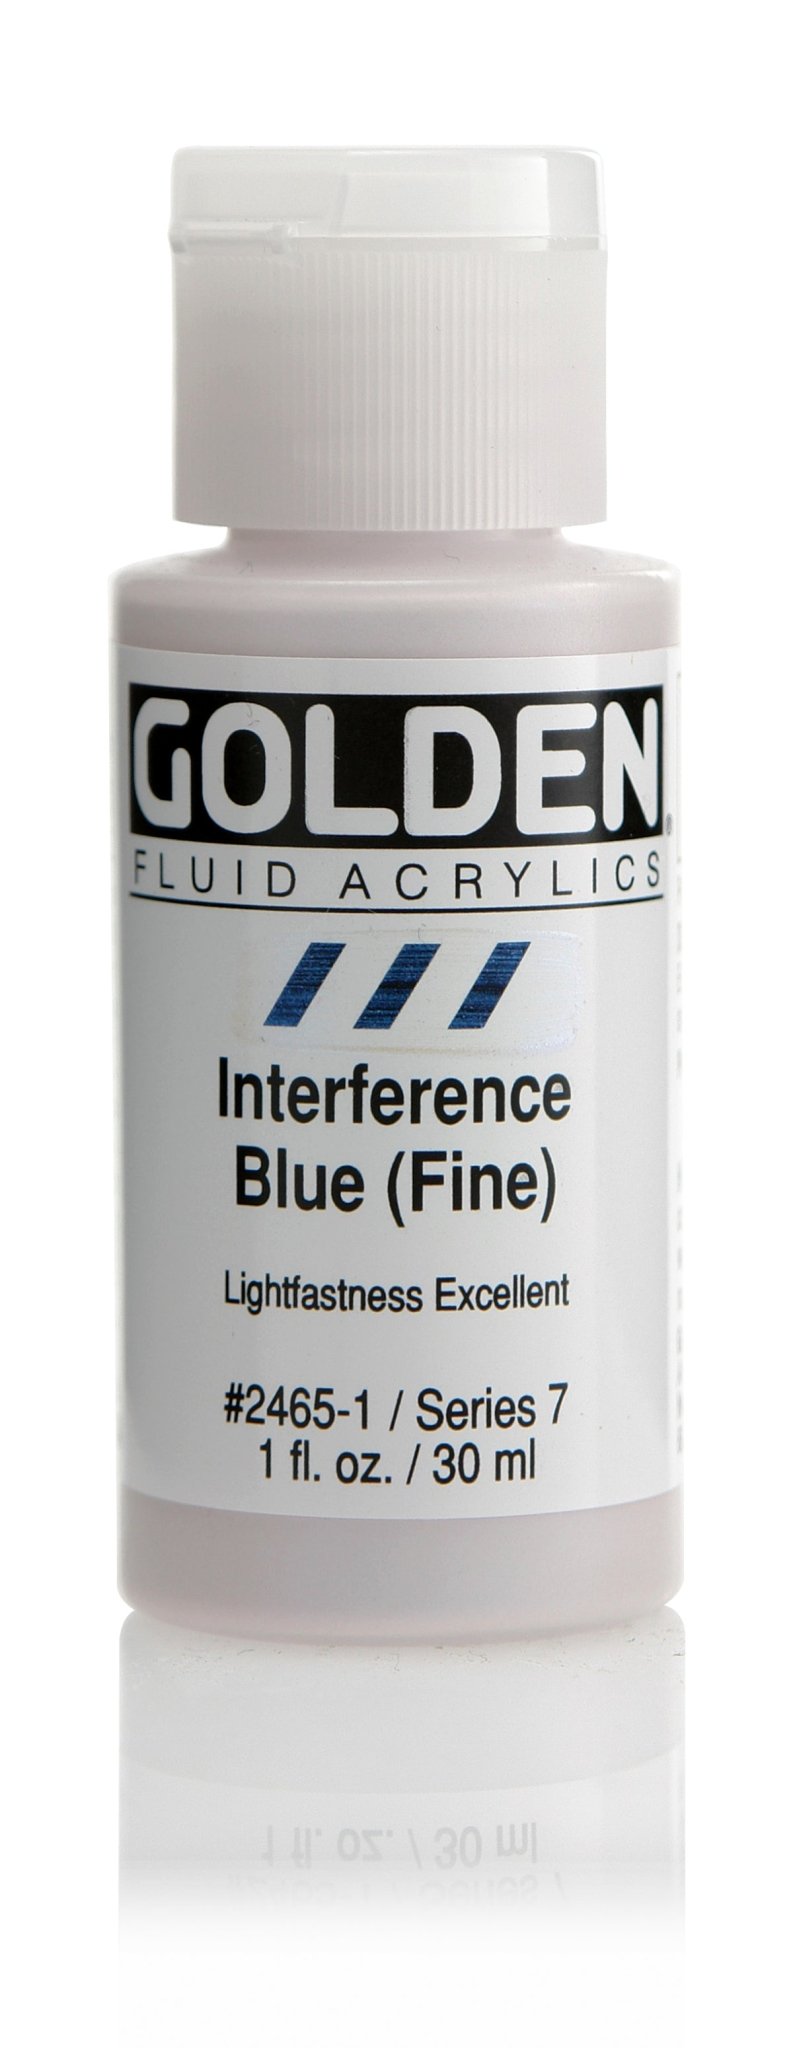 Golden Fluid Acrylic 30ml Interference Blue (fine) - theartshop.com.au